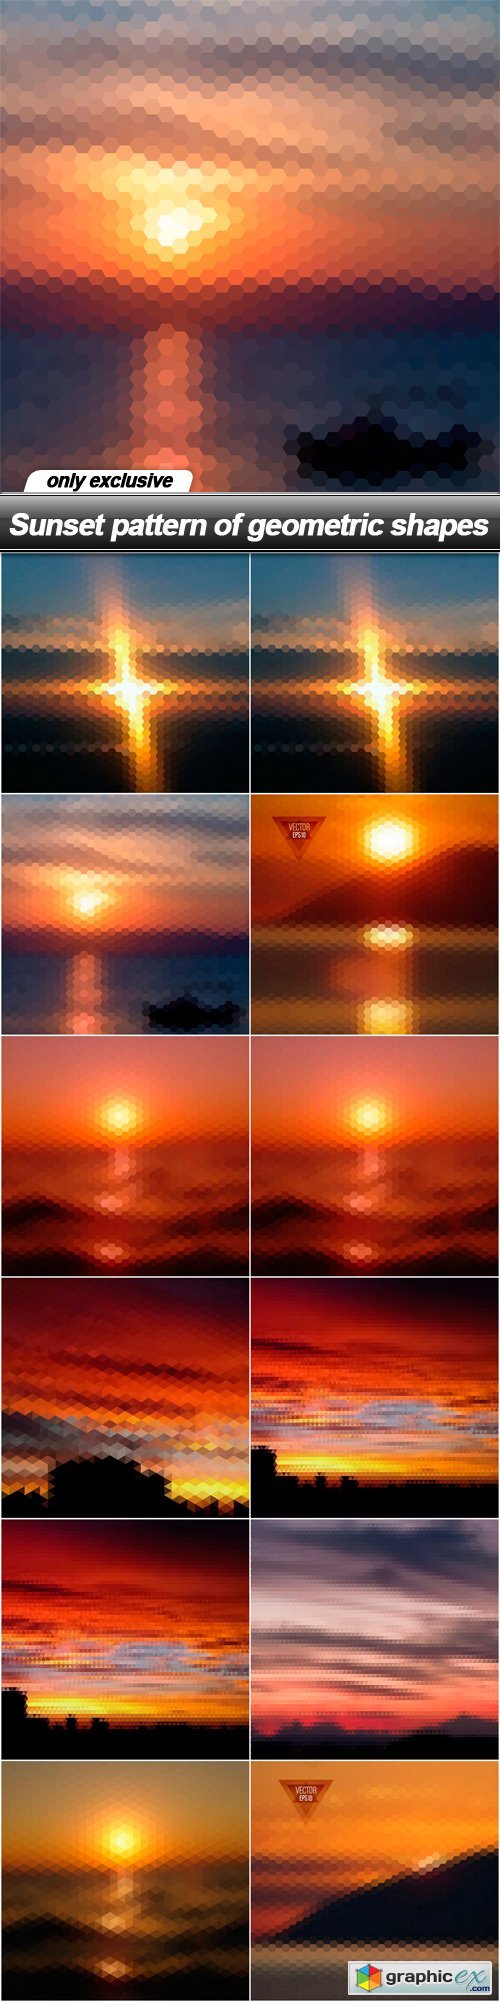 Sunset pattern of geometric shapes - 13 EPS